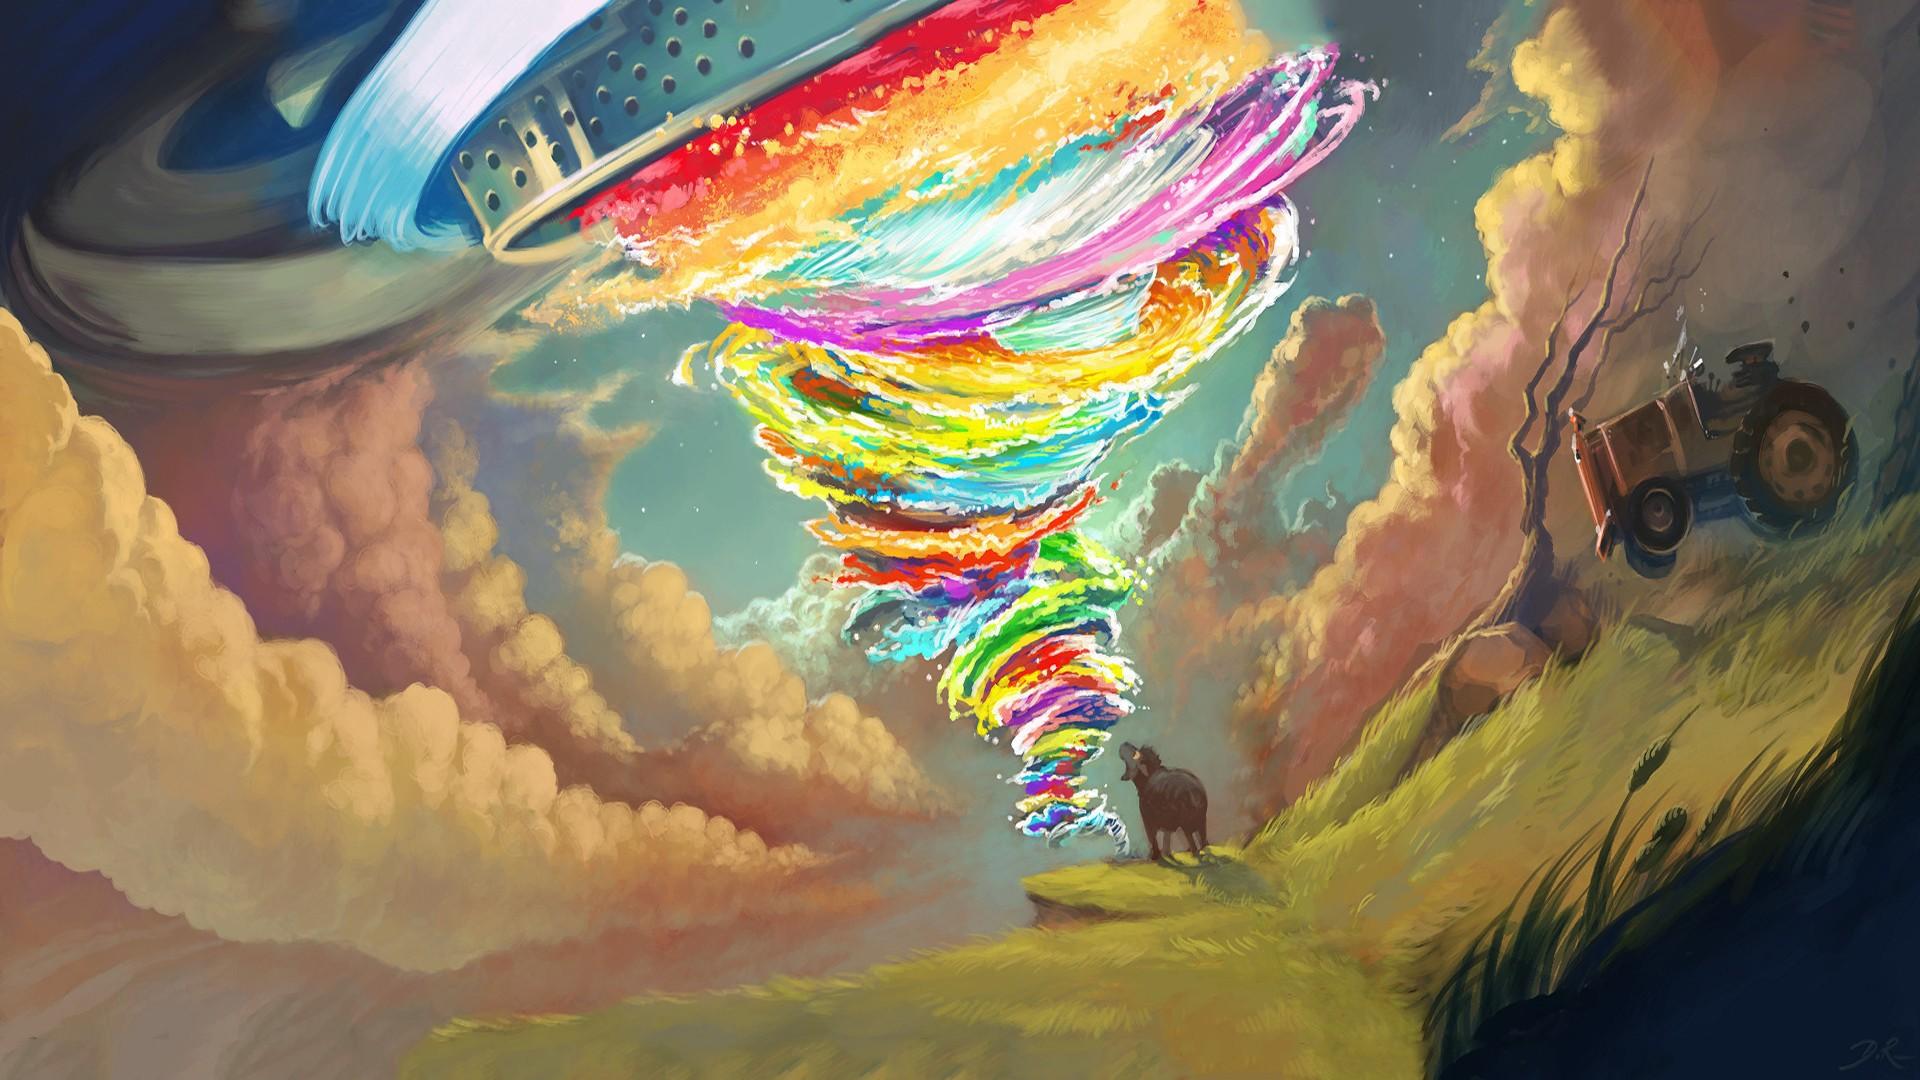 Fantastic rainbow tornado wallpaper and image